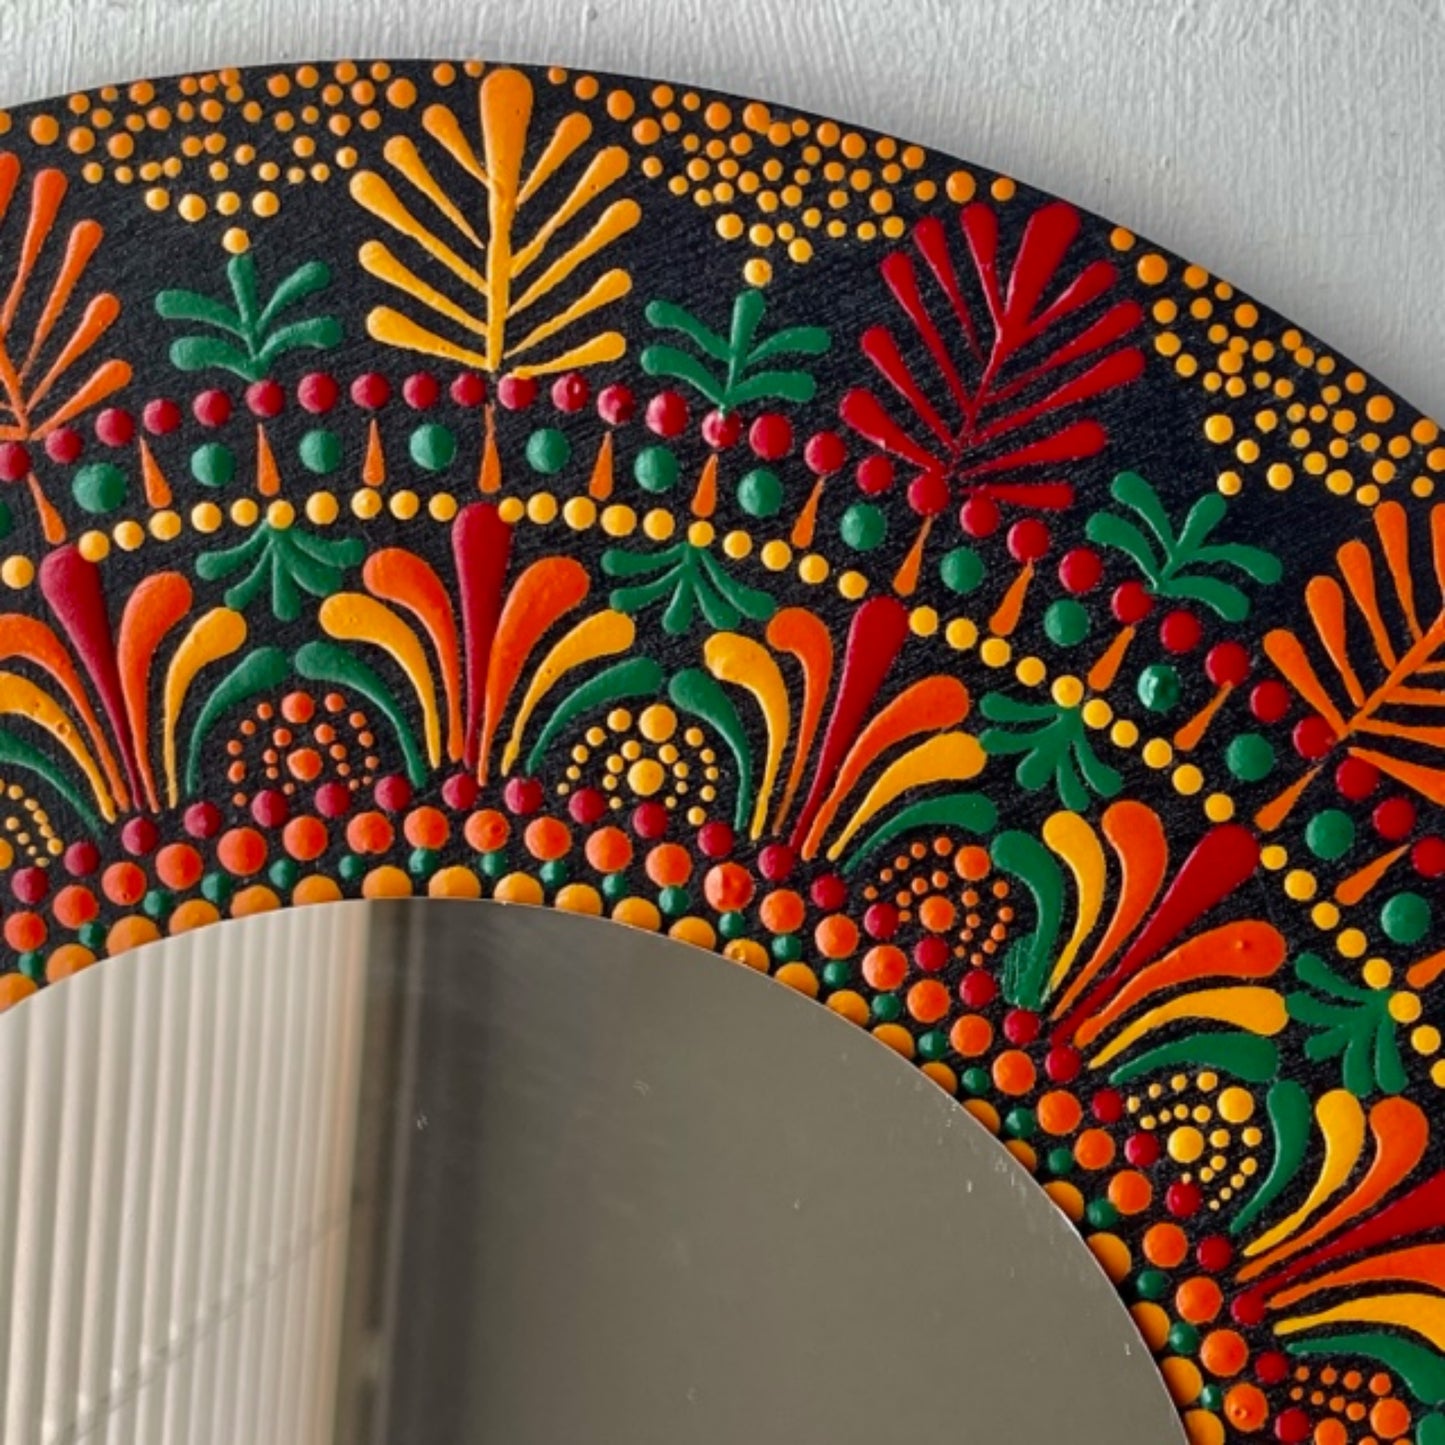 Wall Mirrors Dot Art Mandala Vibrant Colors Handmade Acrylic Painting Home Office Art Work